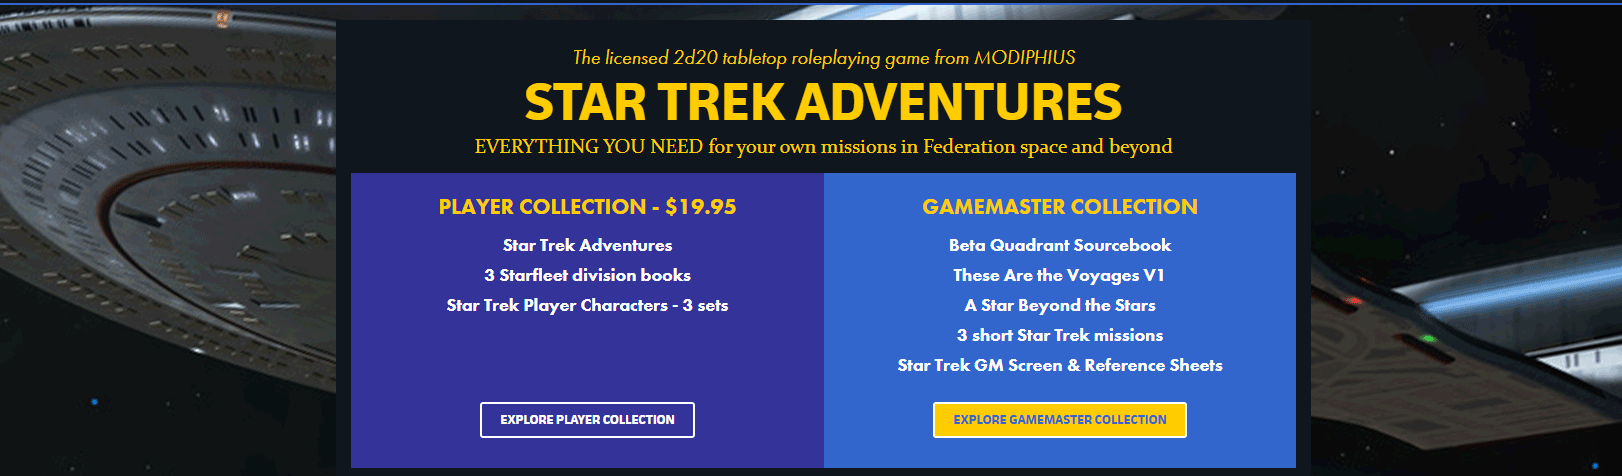 star trek adventures missions